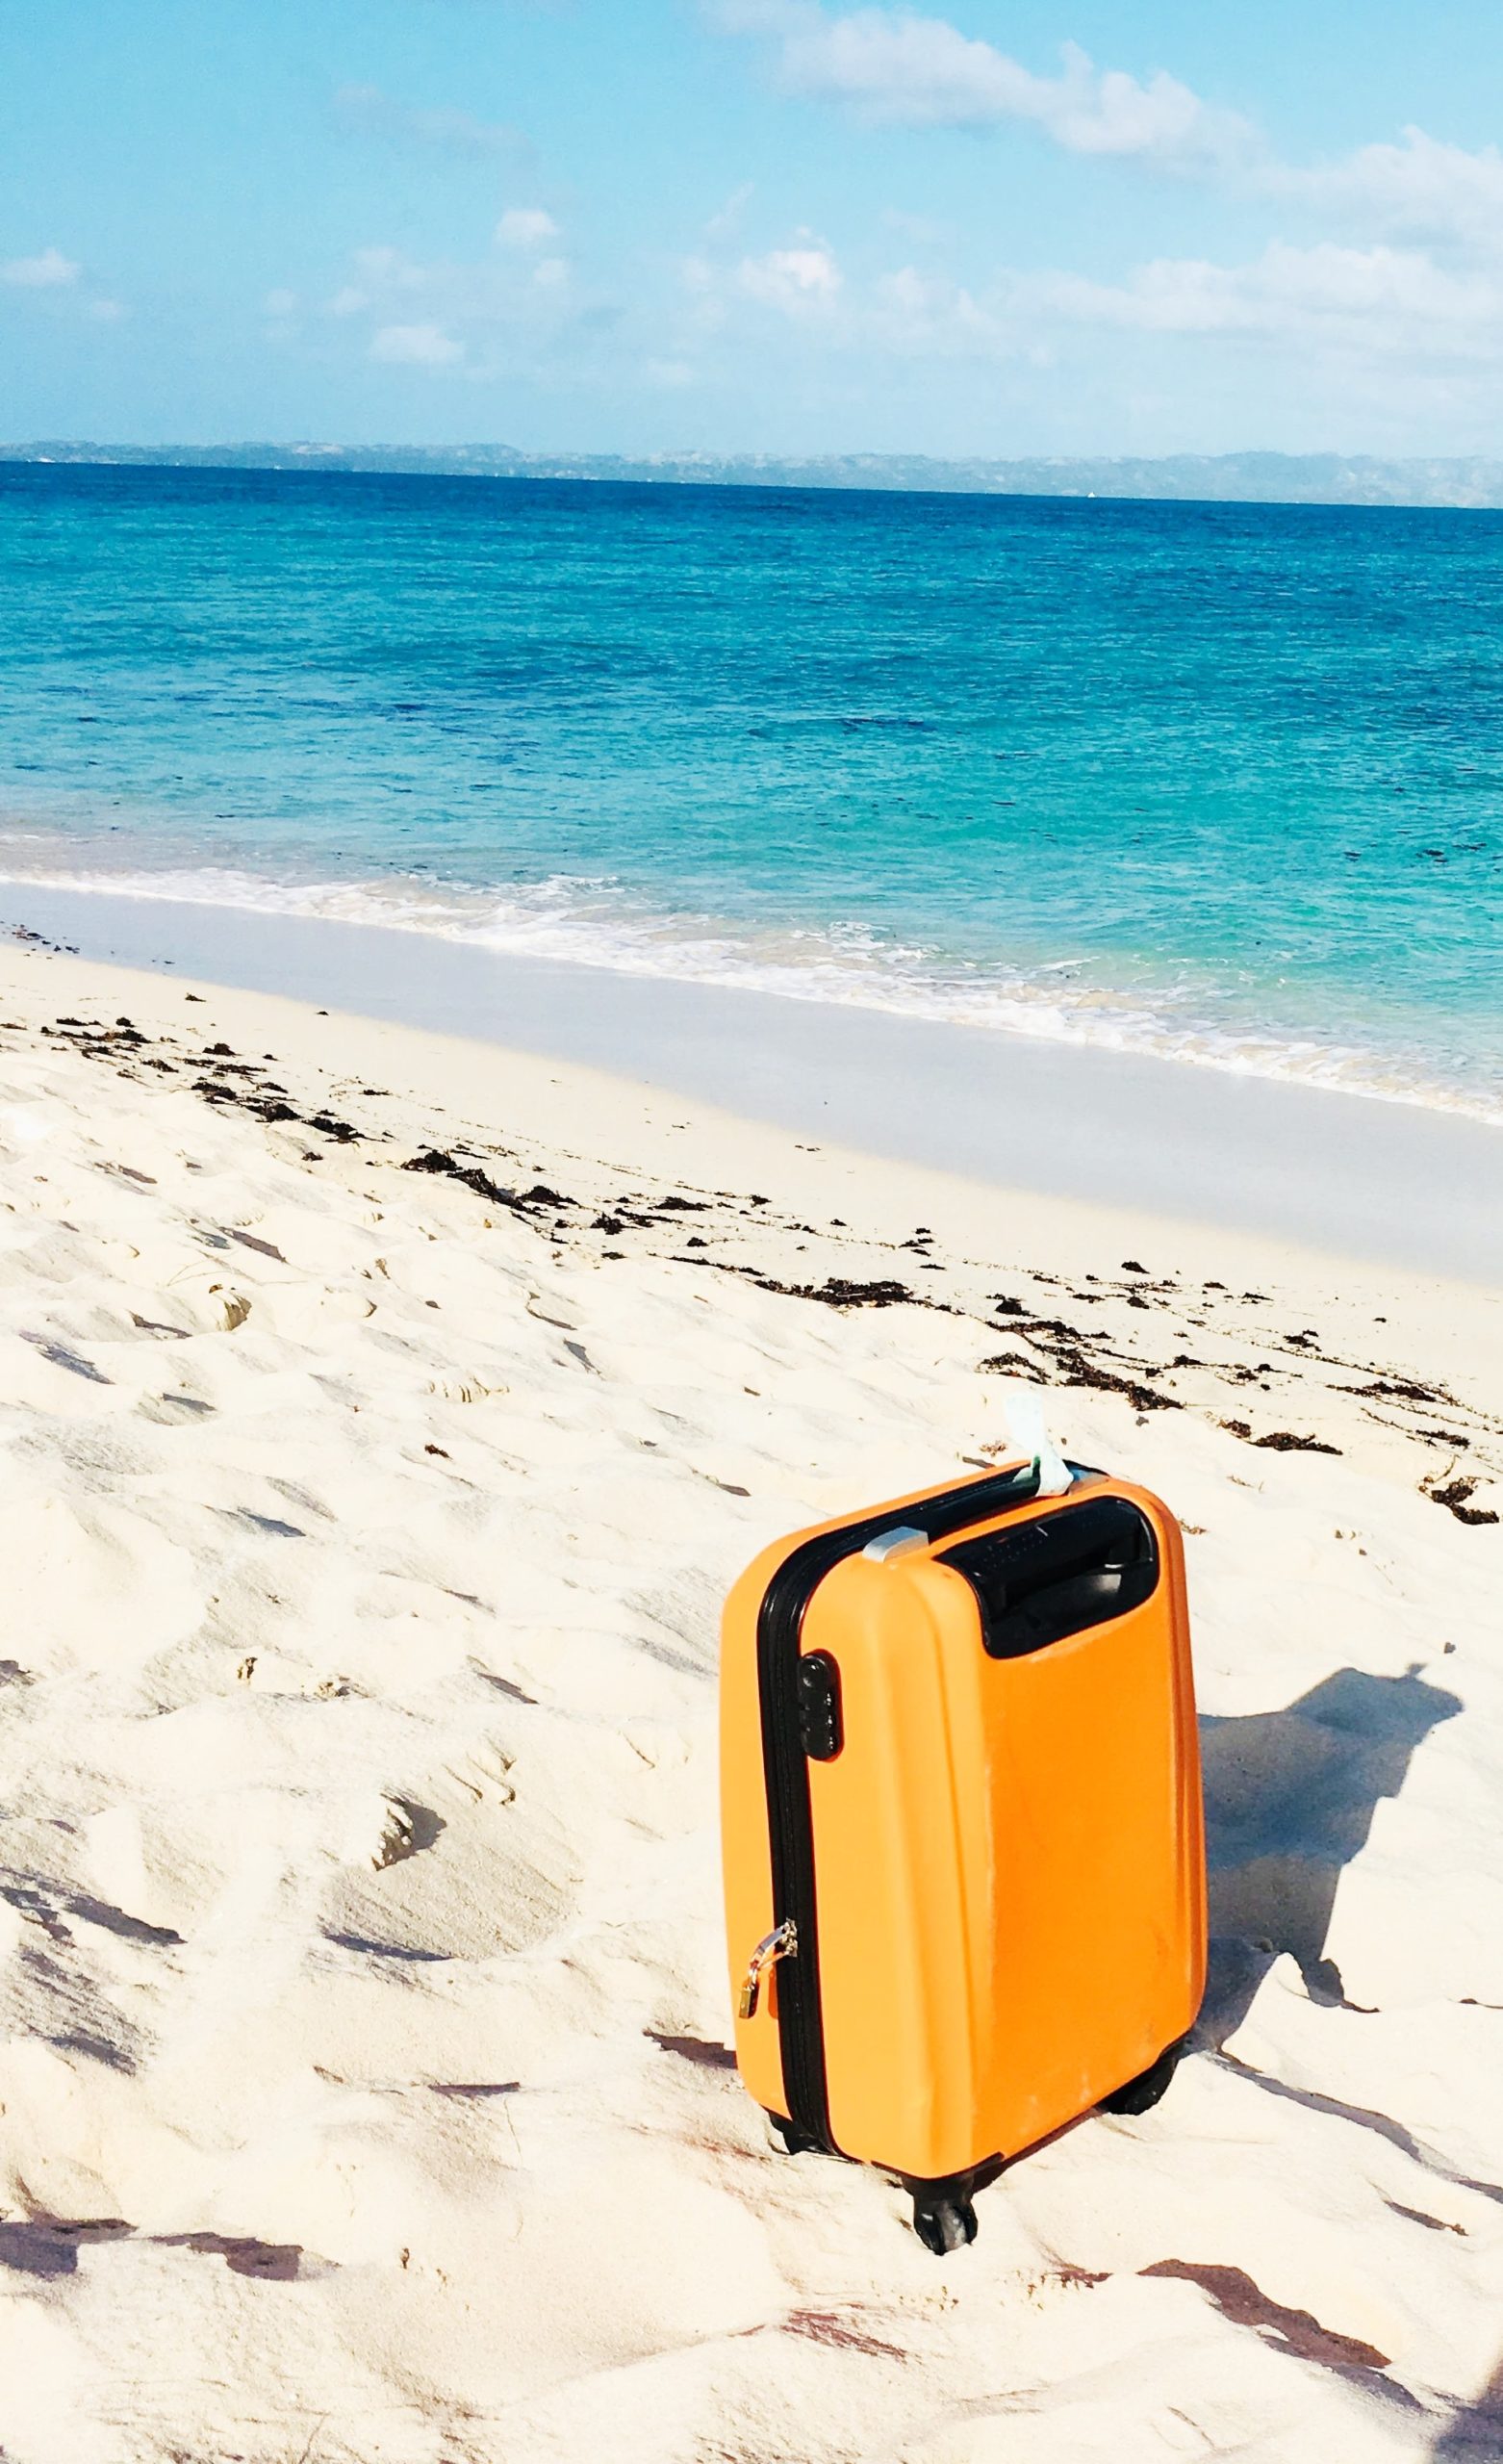 <img src="ATX.jpg" alt="ATX orange suitcase on the beach"/> 